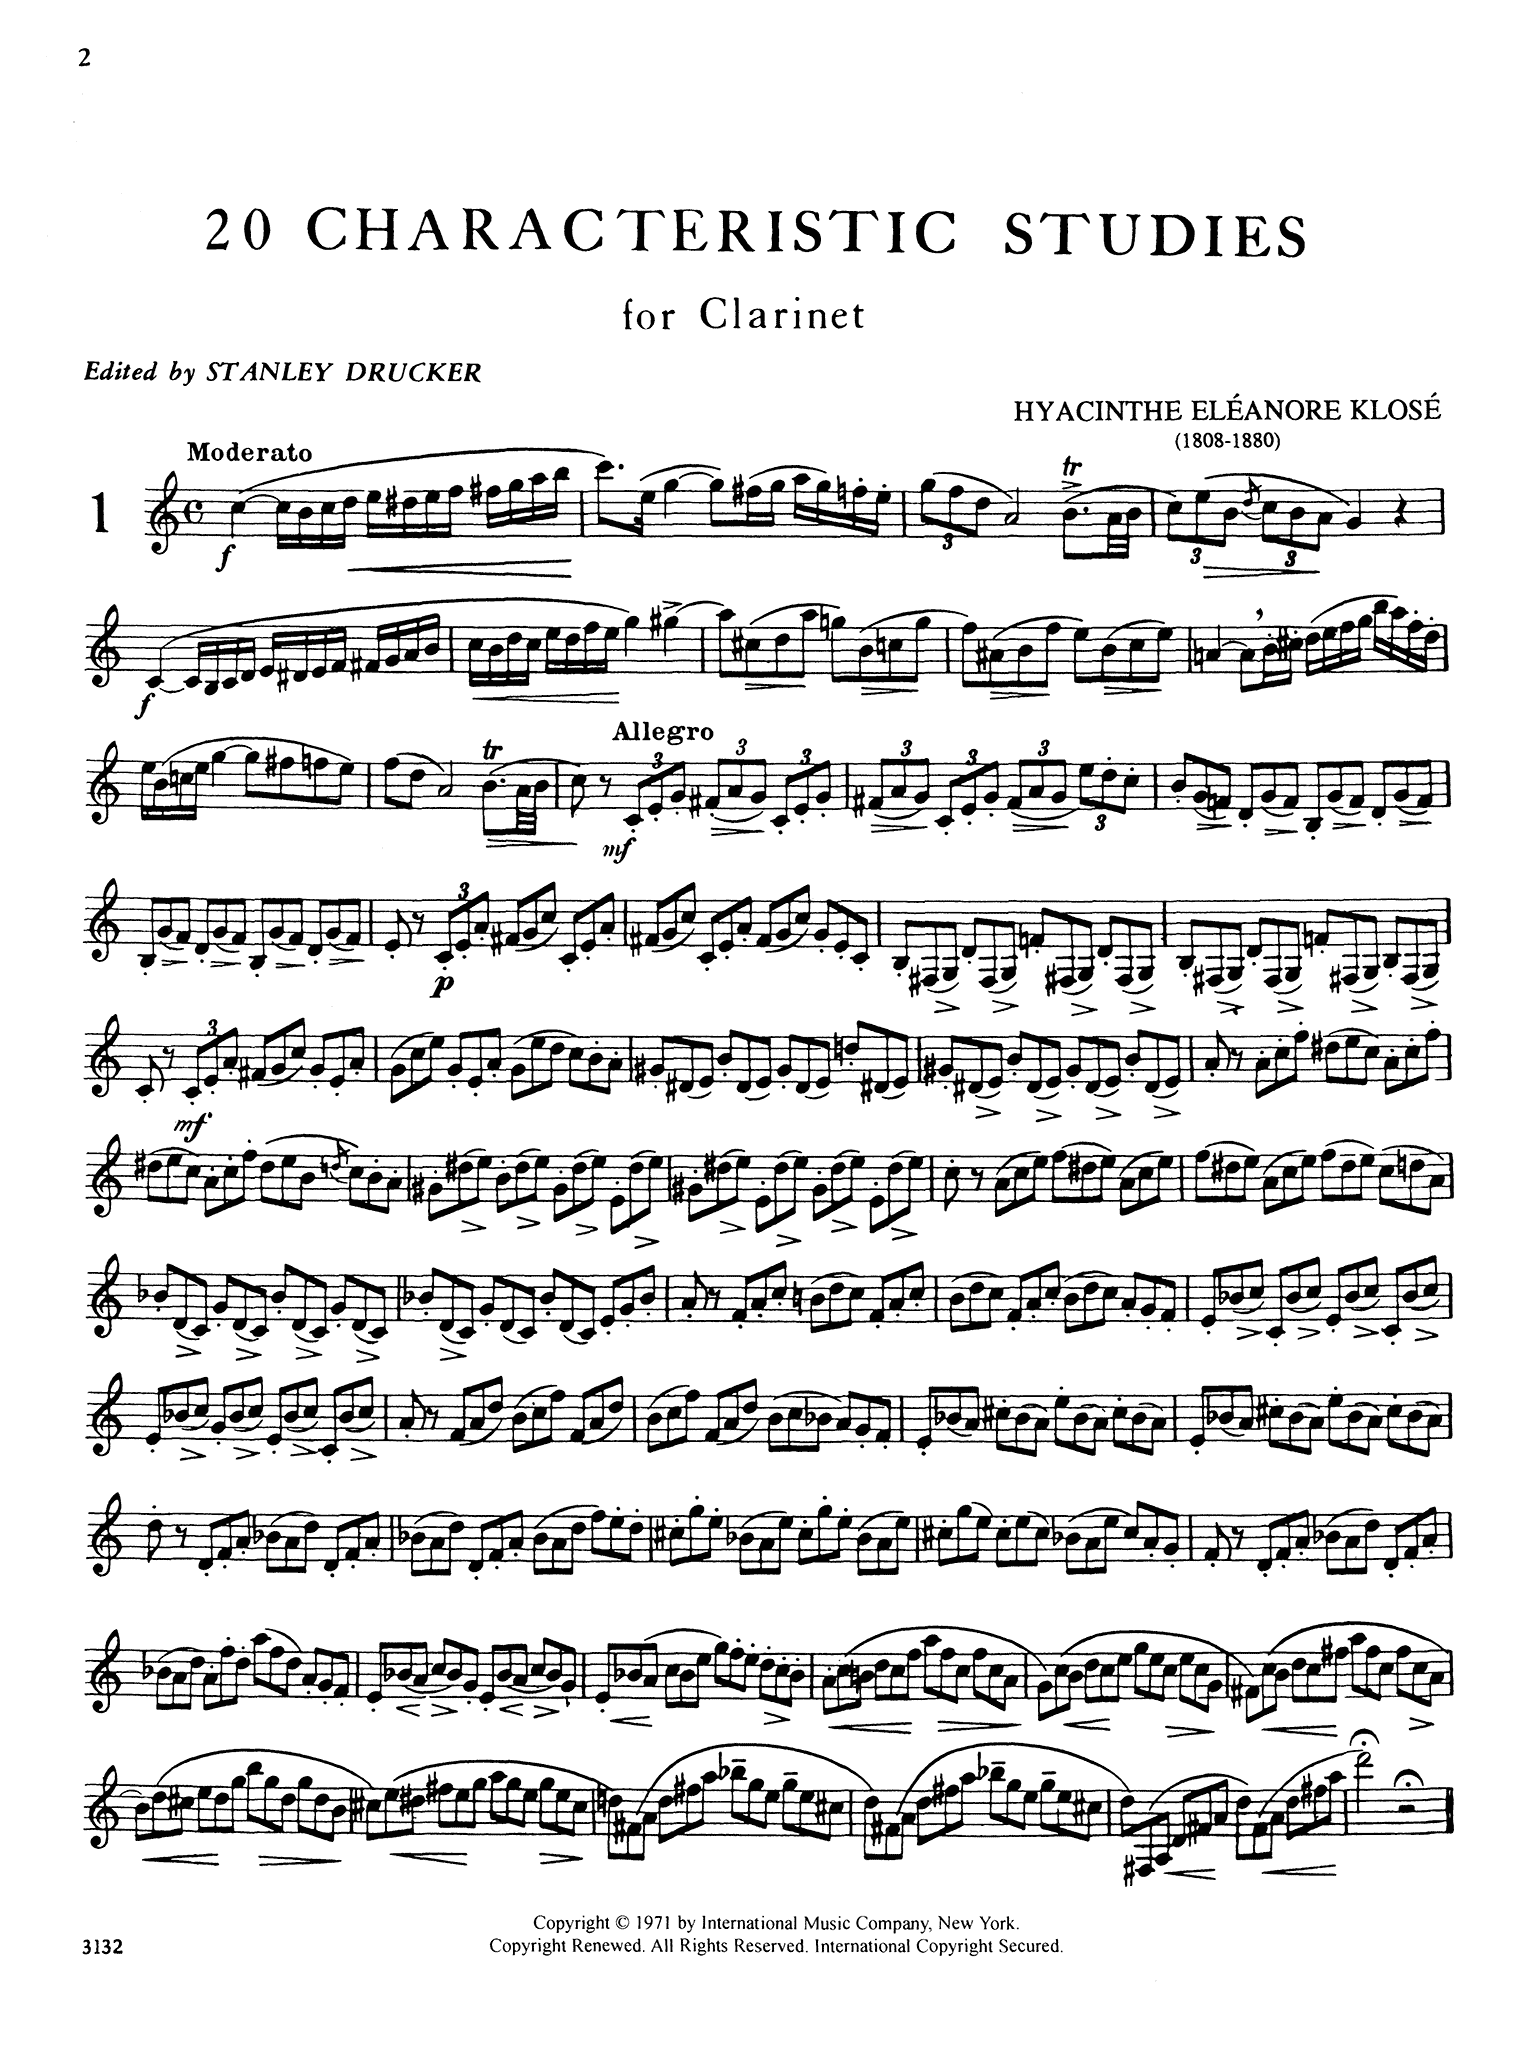 Klosé 20 Characteristic Studies for Clarinet no. 1